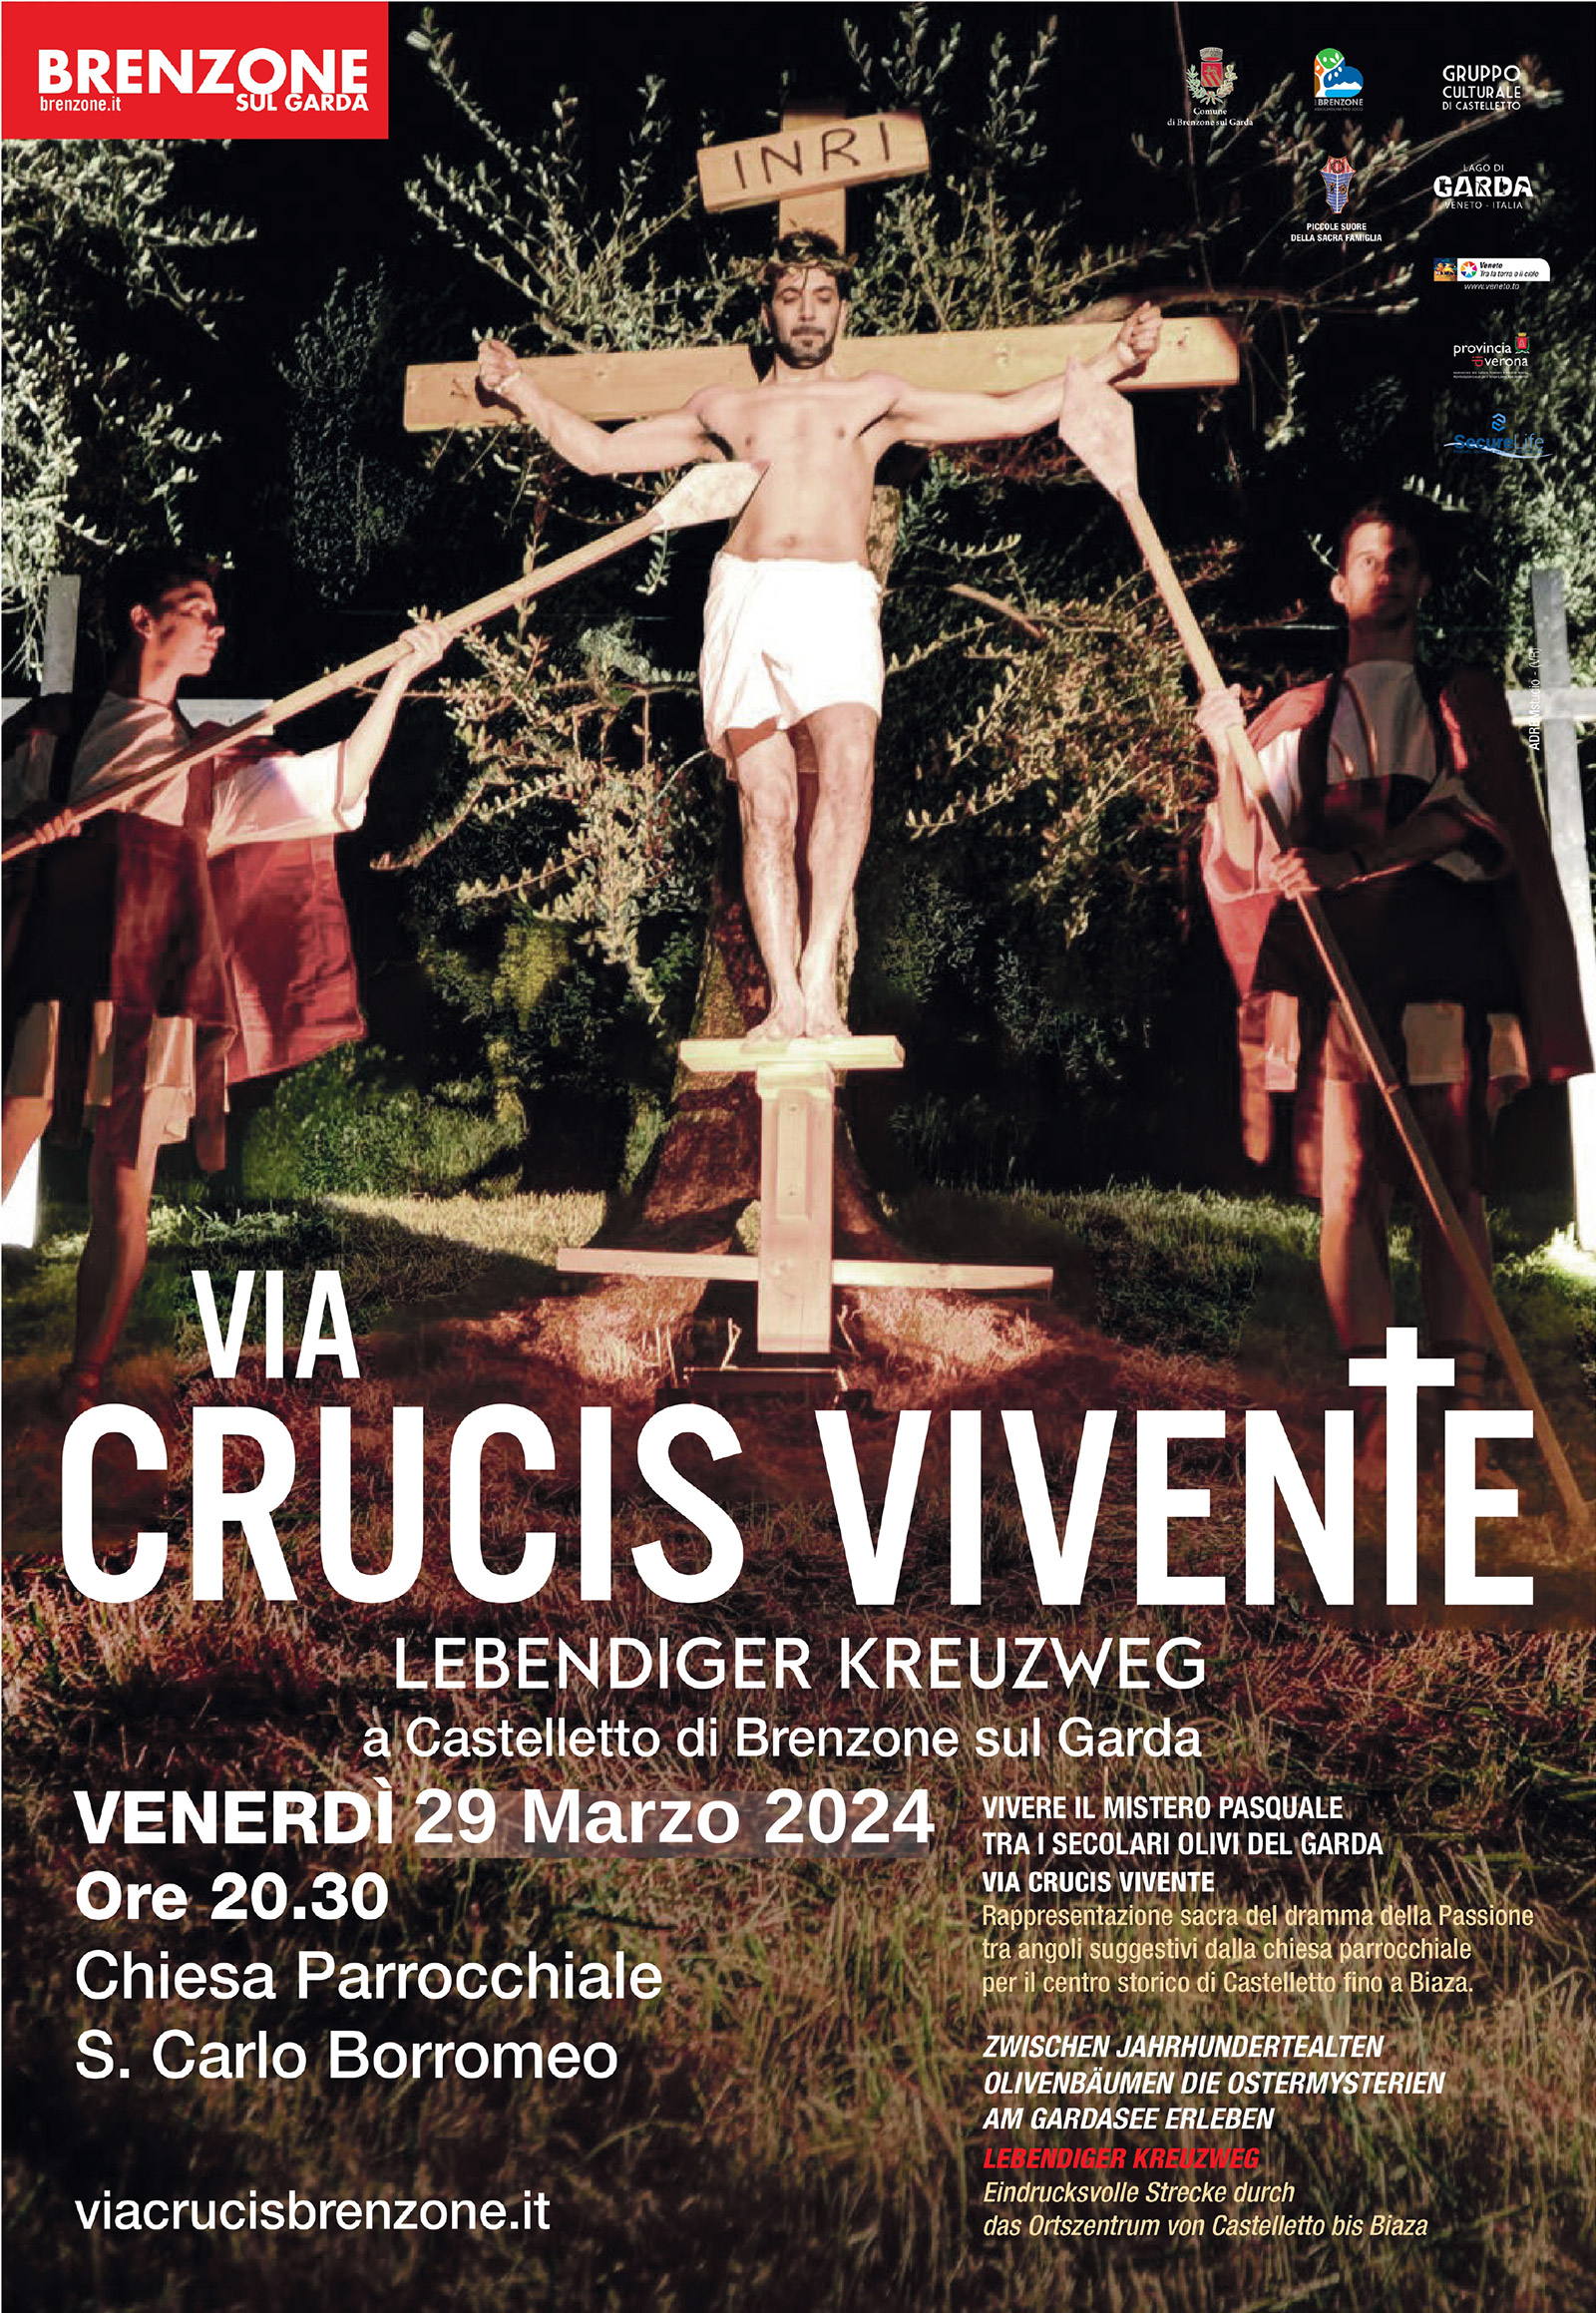 Via Crucis vivente del Venerdì Santo - Lebendige Darstellung der Via Crucis am Karfreitag - Good Friday Via Crucis 